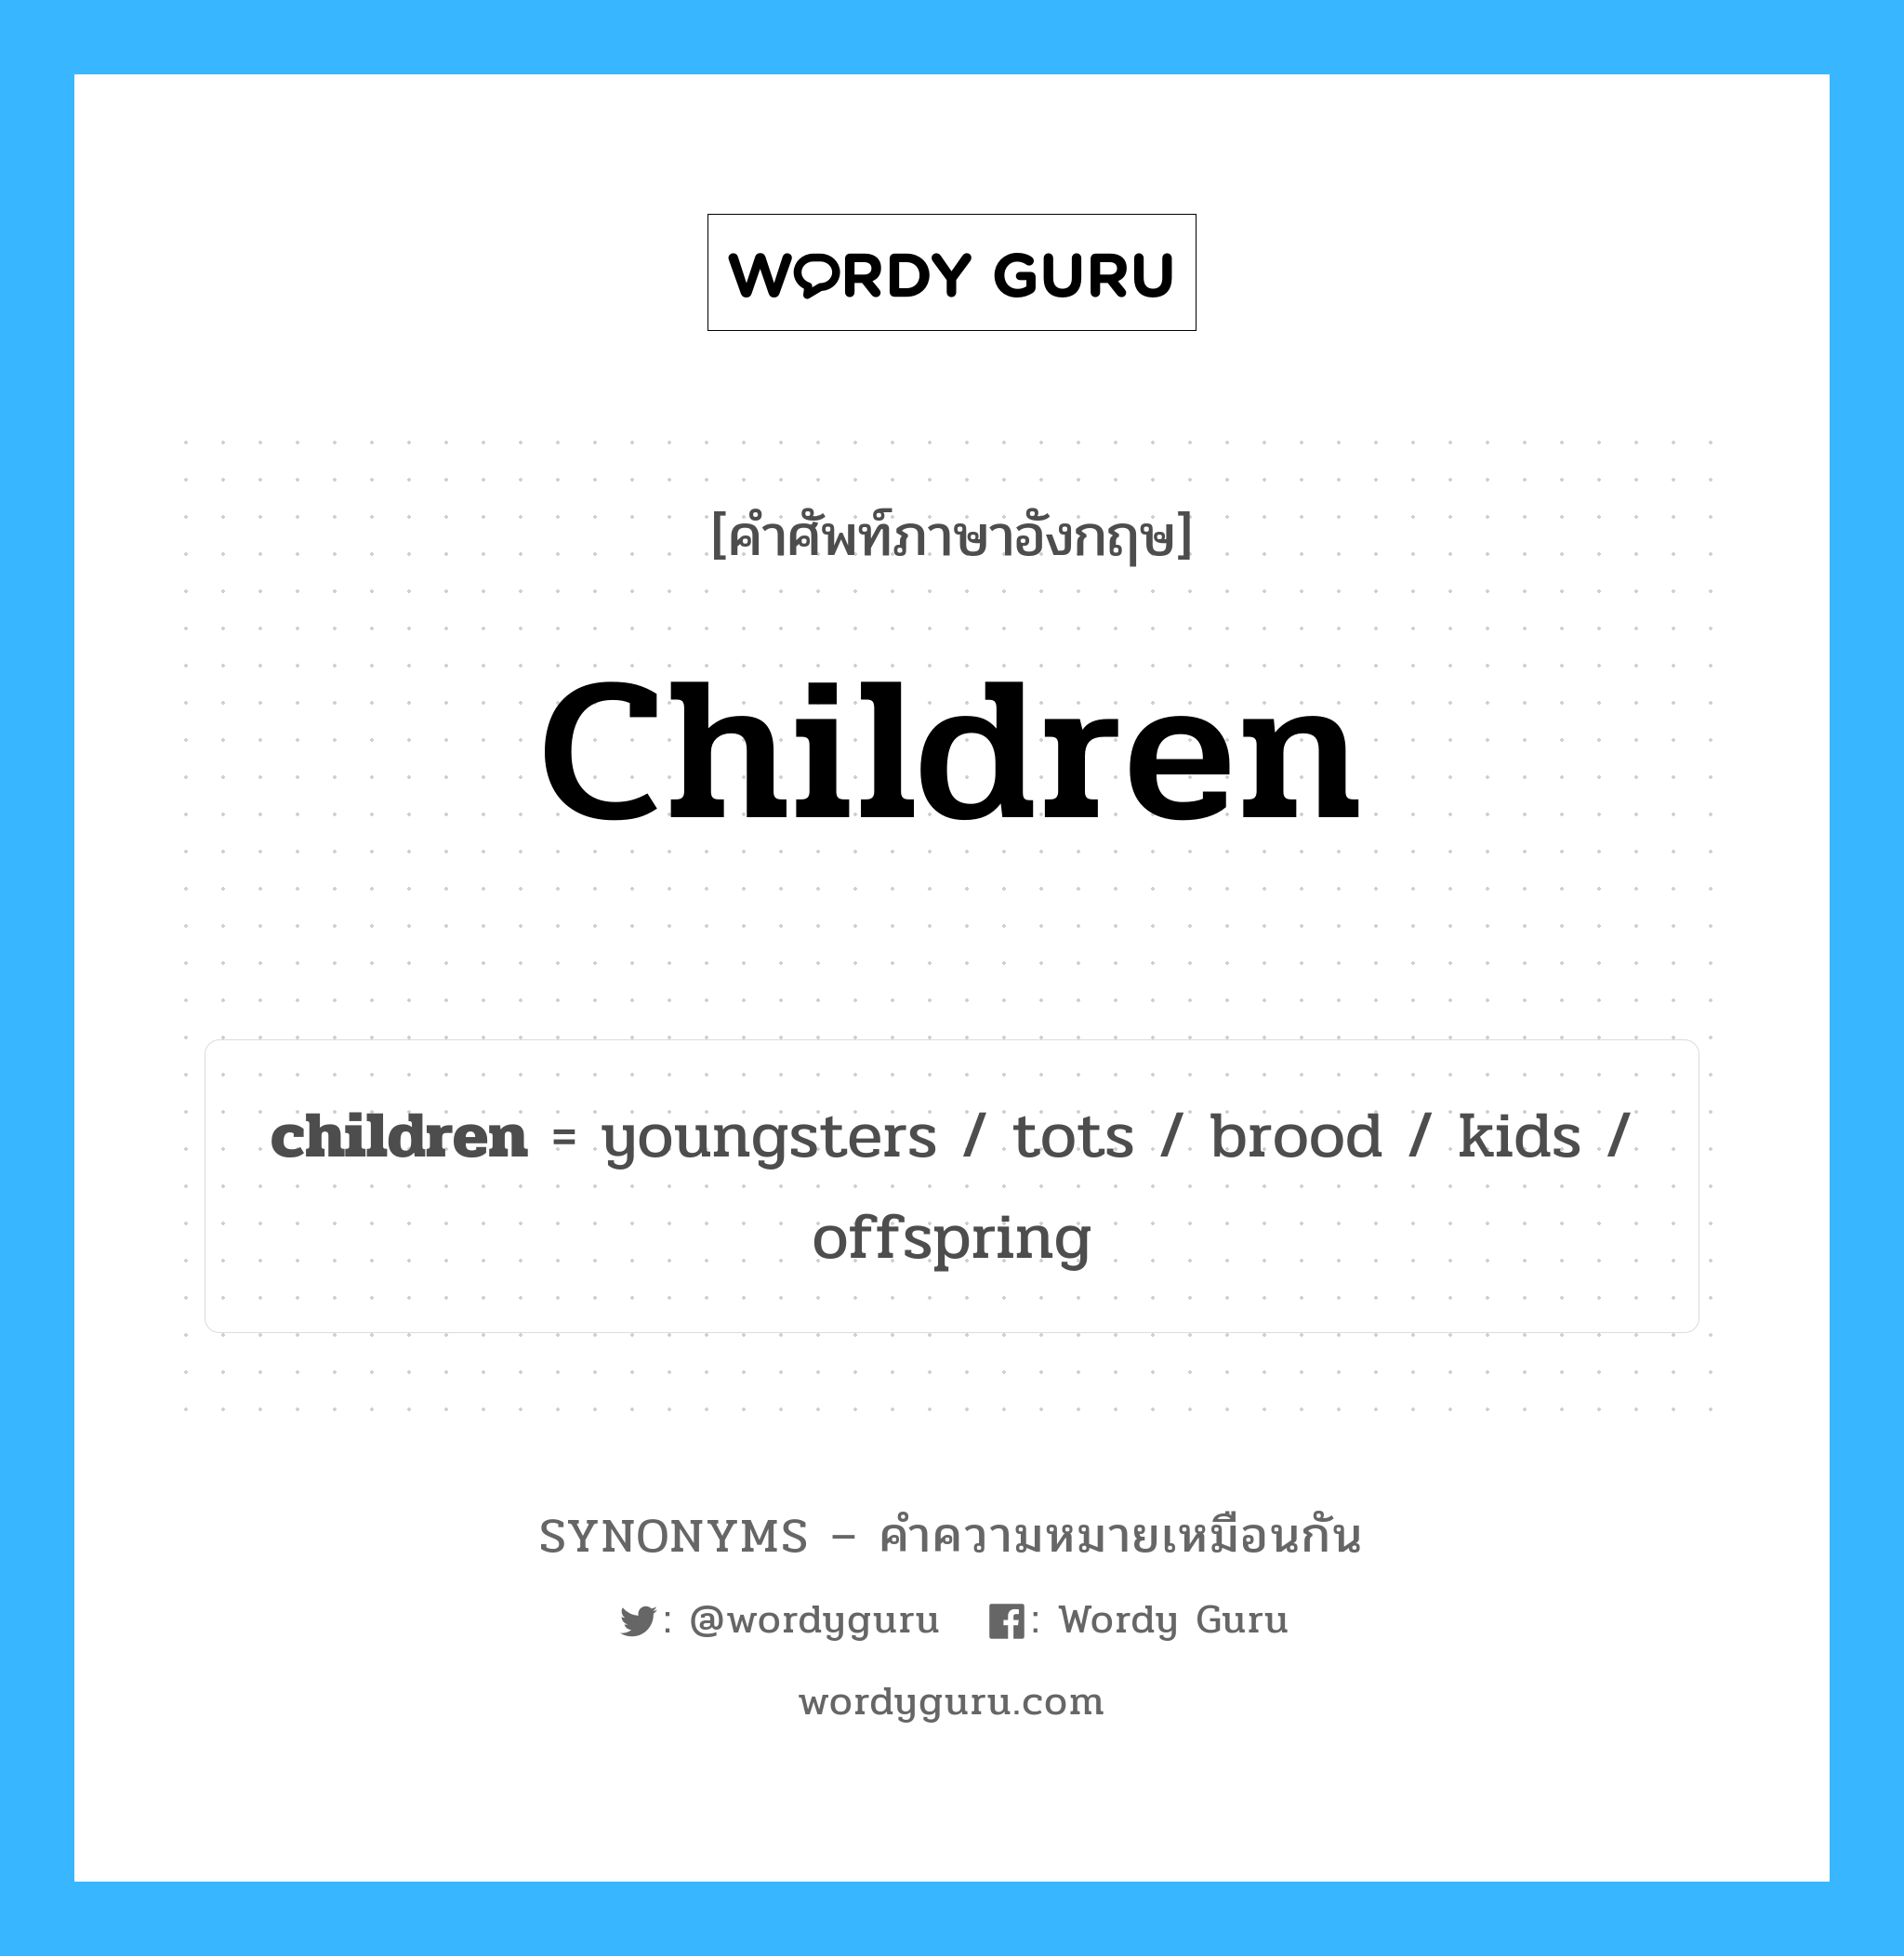 kids เป็นหนึ่งใน children และมีคำอื่น ๆ อีกดังนี้, คำศัพท์ภาษาอังกฤษ kids ความหมายคล้ายกันกับ children แปลว่า เด็ก หมวด children